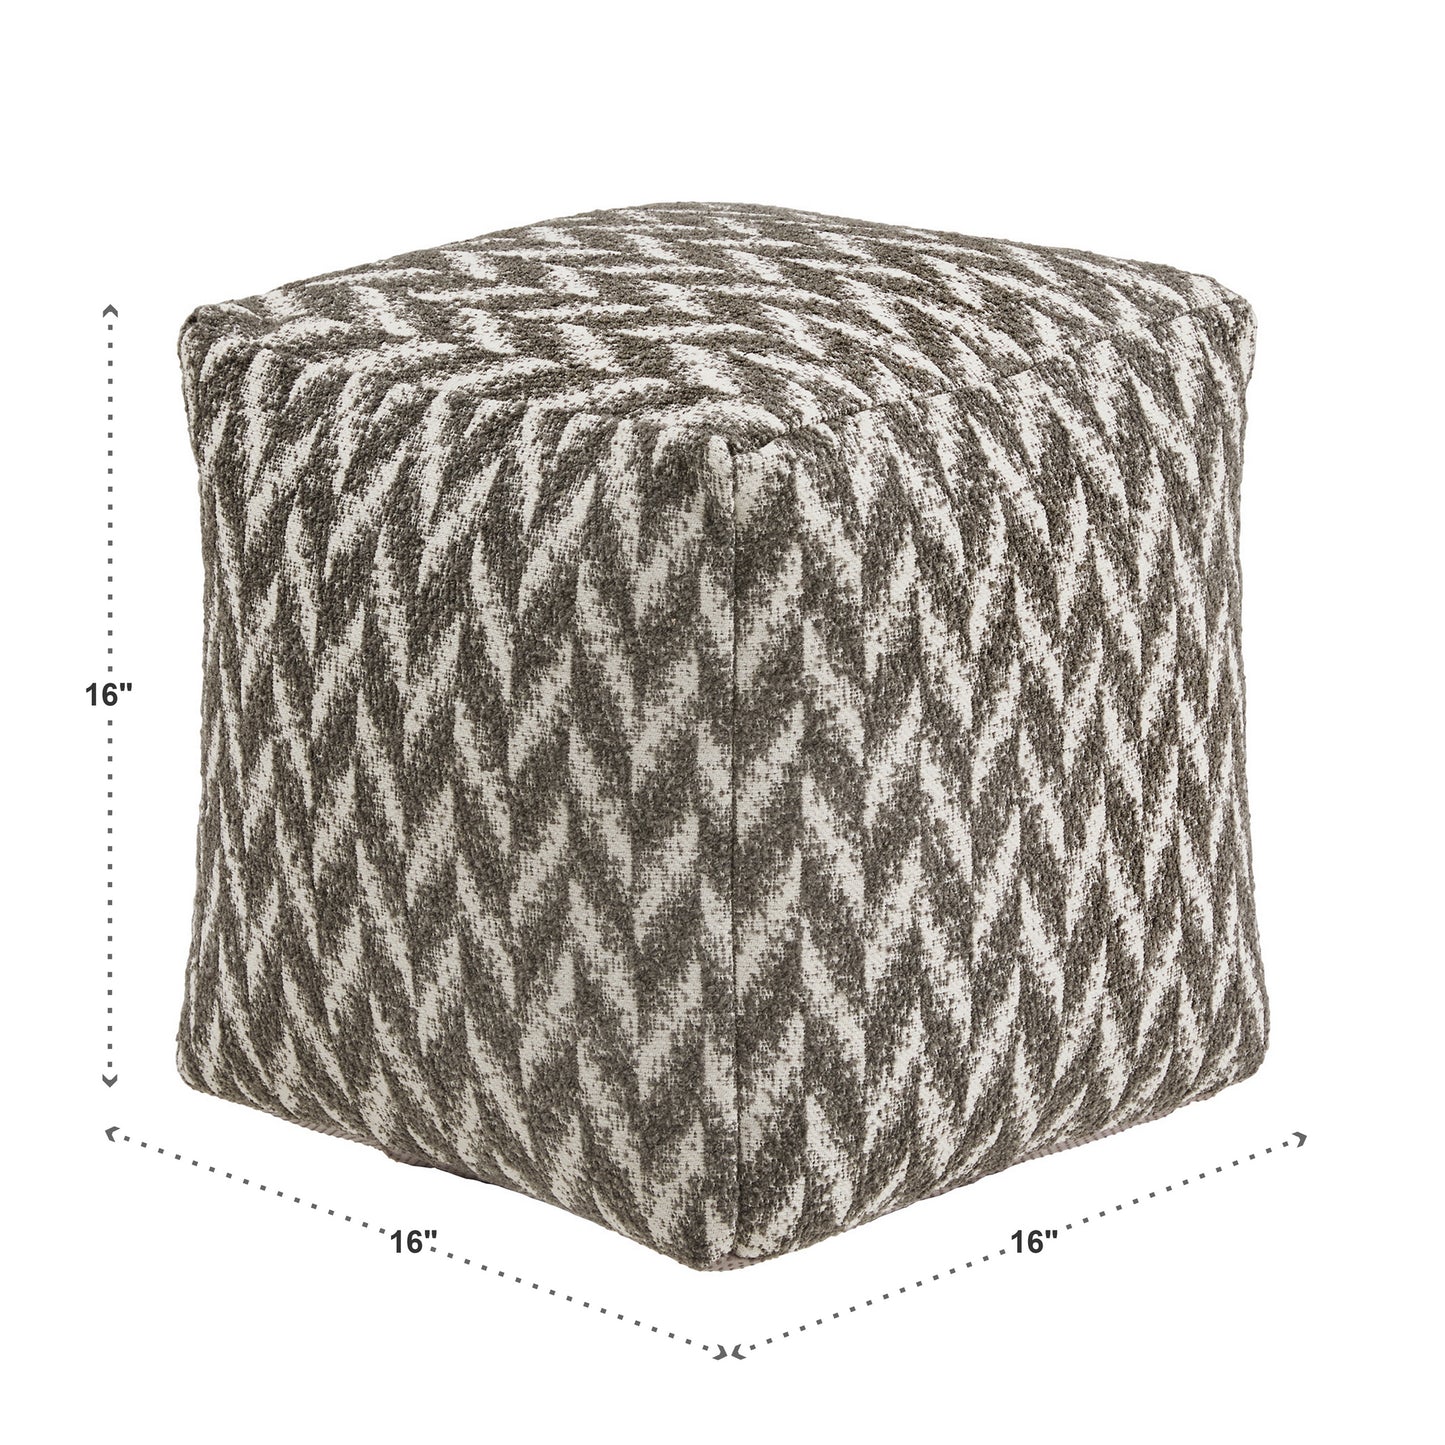 Upholstered Square Pouf Ottoman - Grey & White Herringbone Pattern Fabric